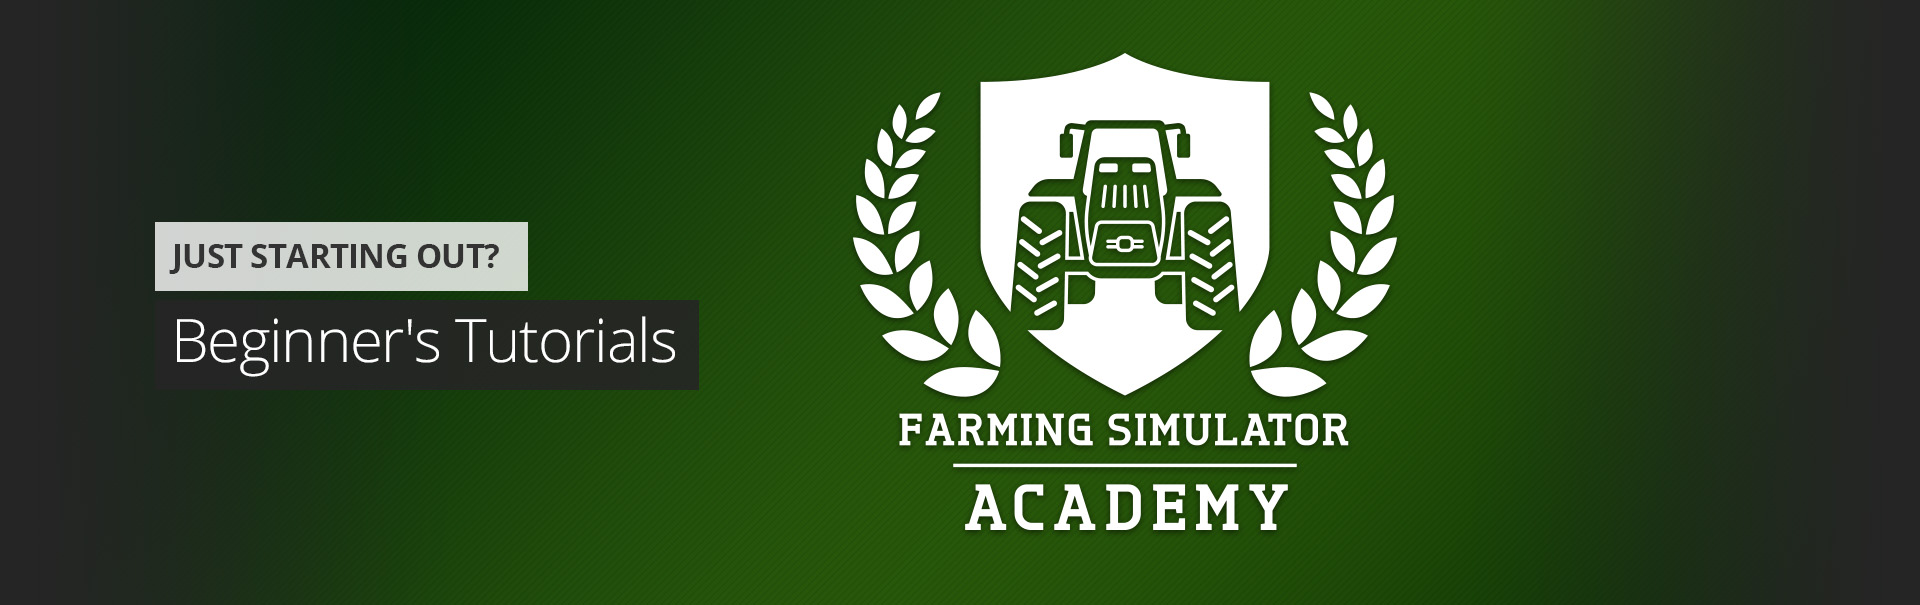 Academia de simulador de agricultura